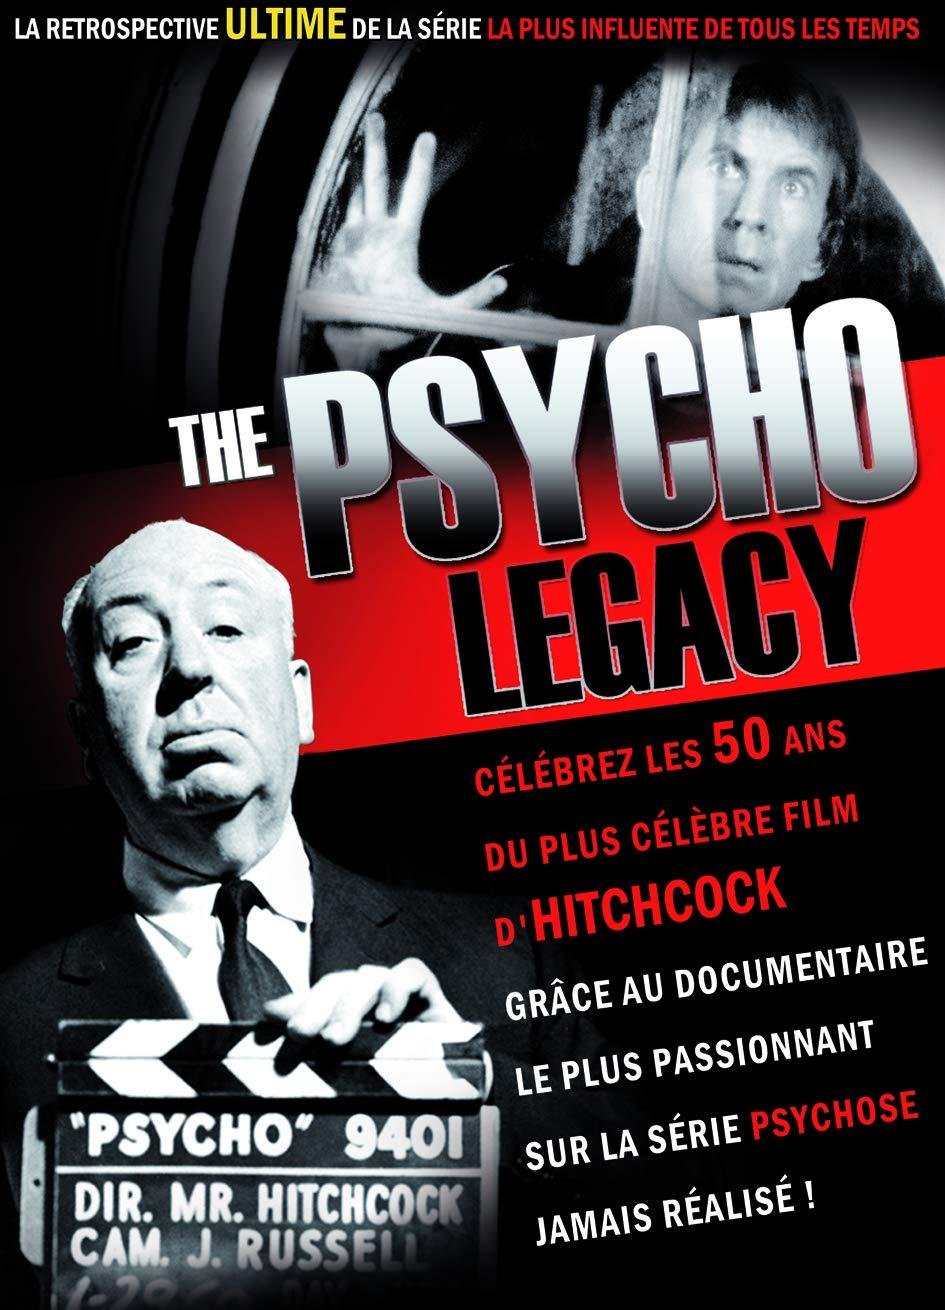 Hitchcock Psycho Legacy 1680648194265